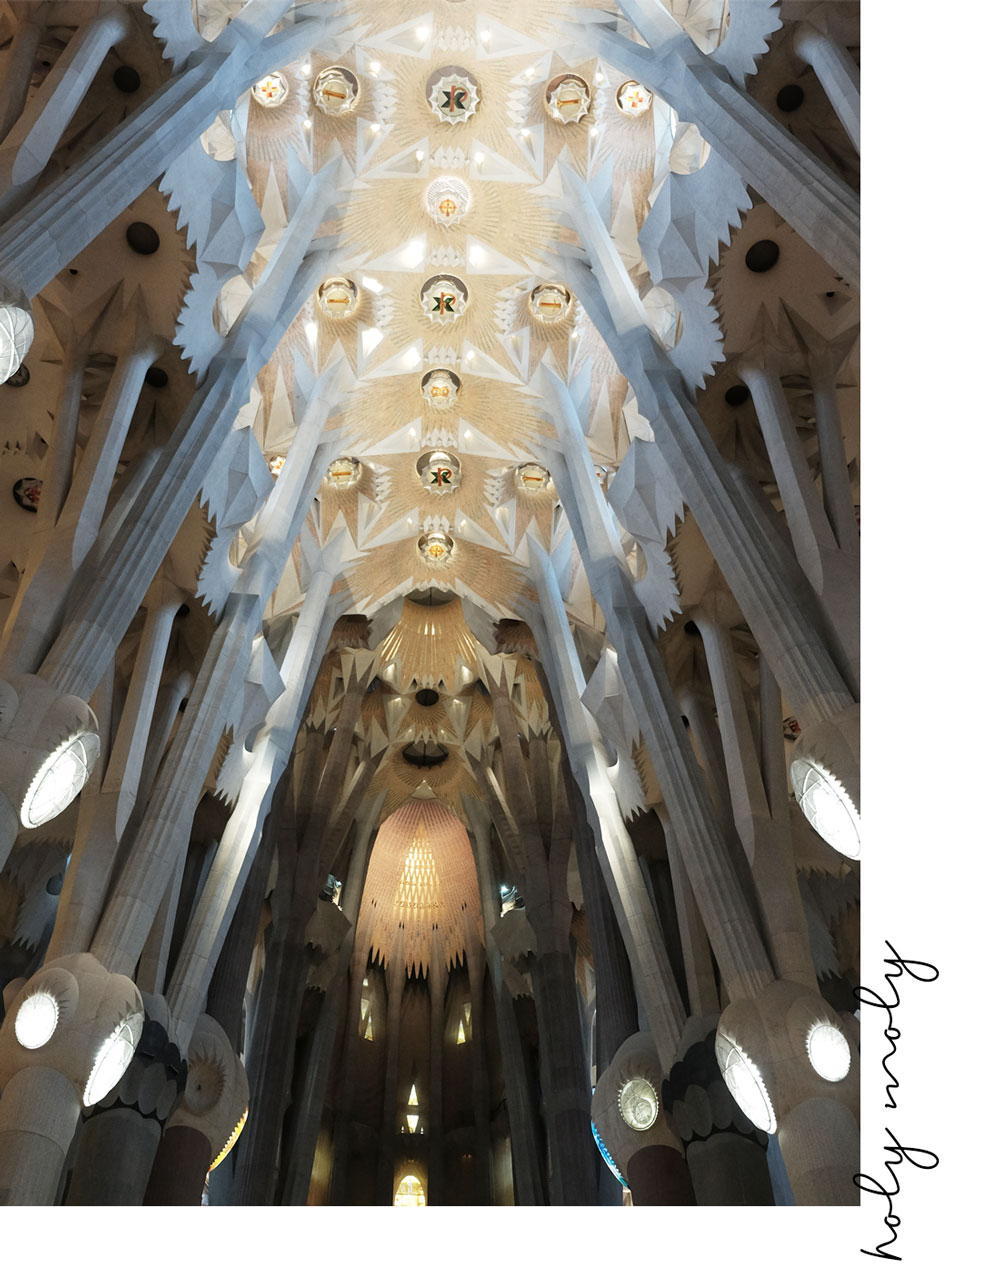  La Sagrada Familiaは見ごたえがある。 #バルセロナでやりたいこと1位｜暮らし上手なブログ #thingstodoinbarcelona #barcelonatravelguide #barcelona #lasagradafamilia